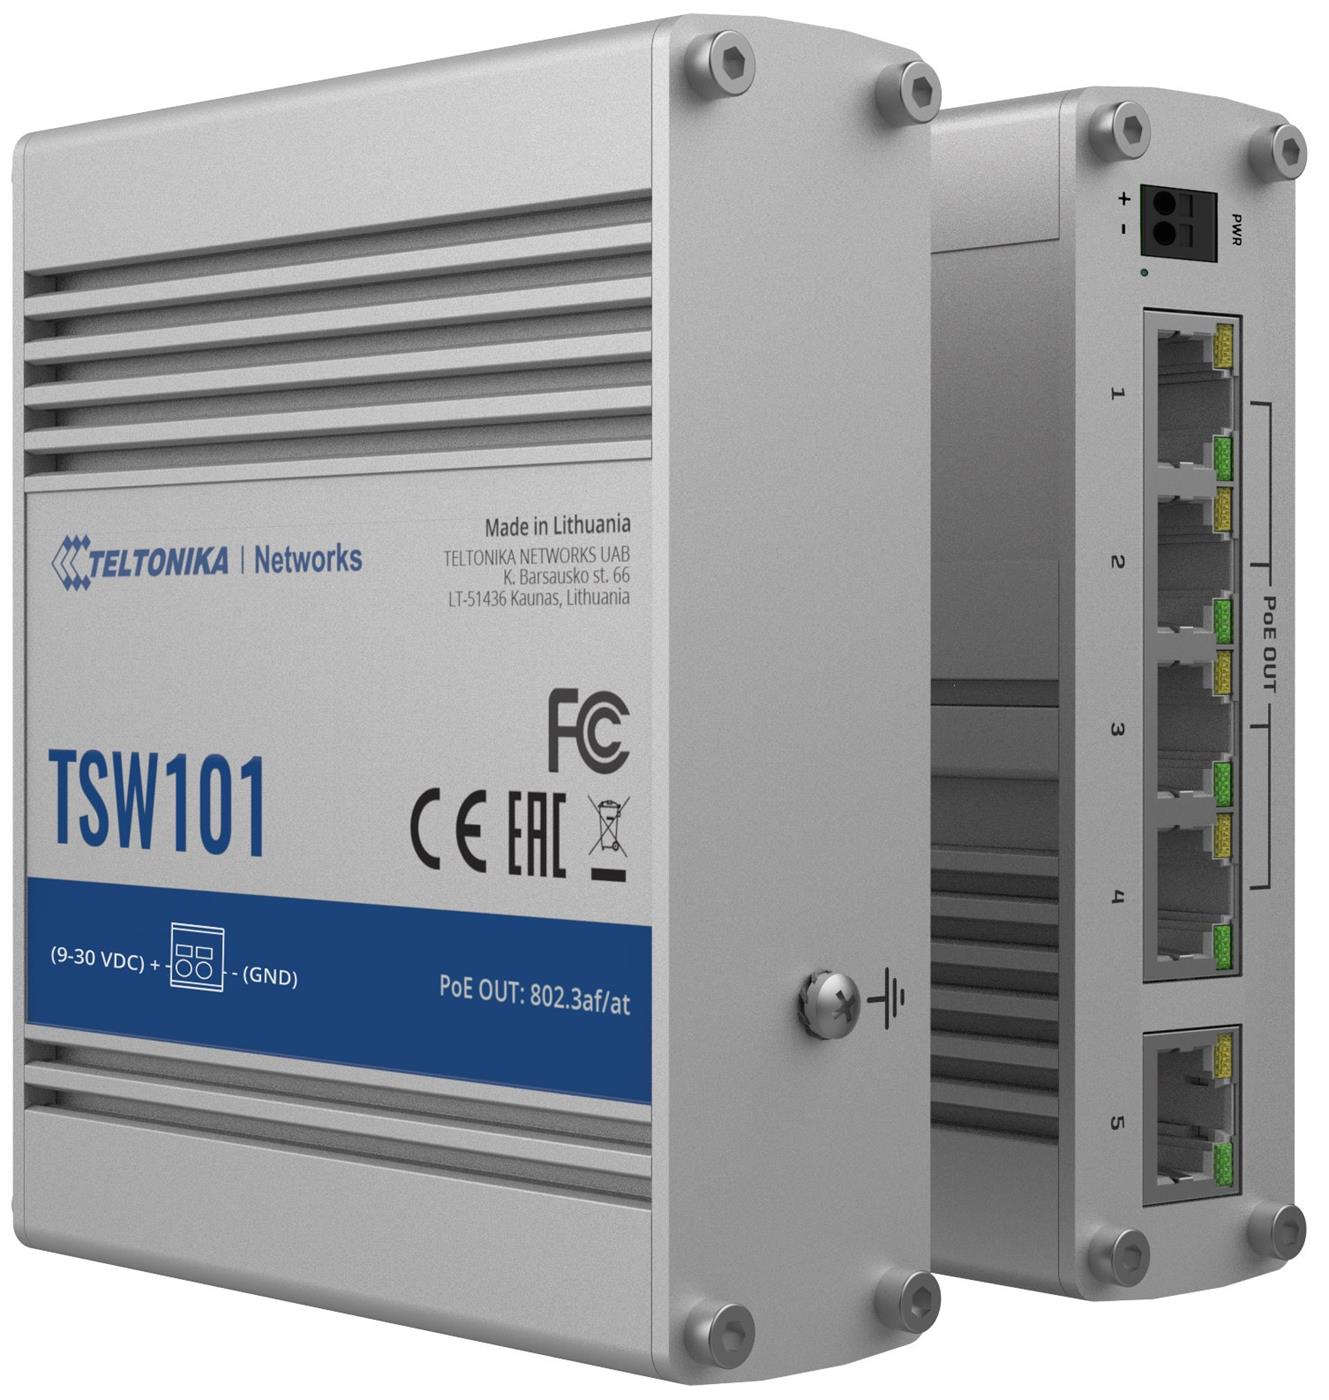 Unmanaged Industrial Switch Teltonika TSW101